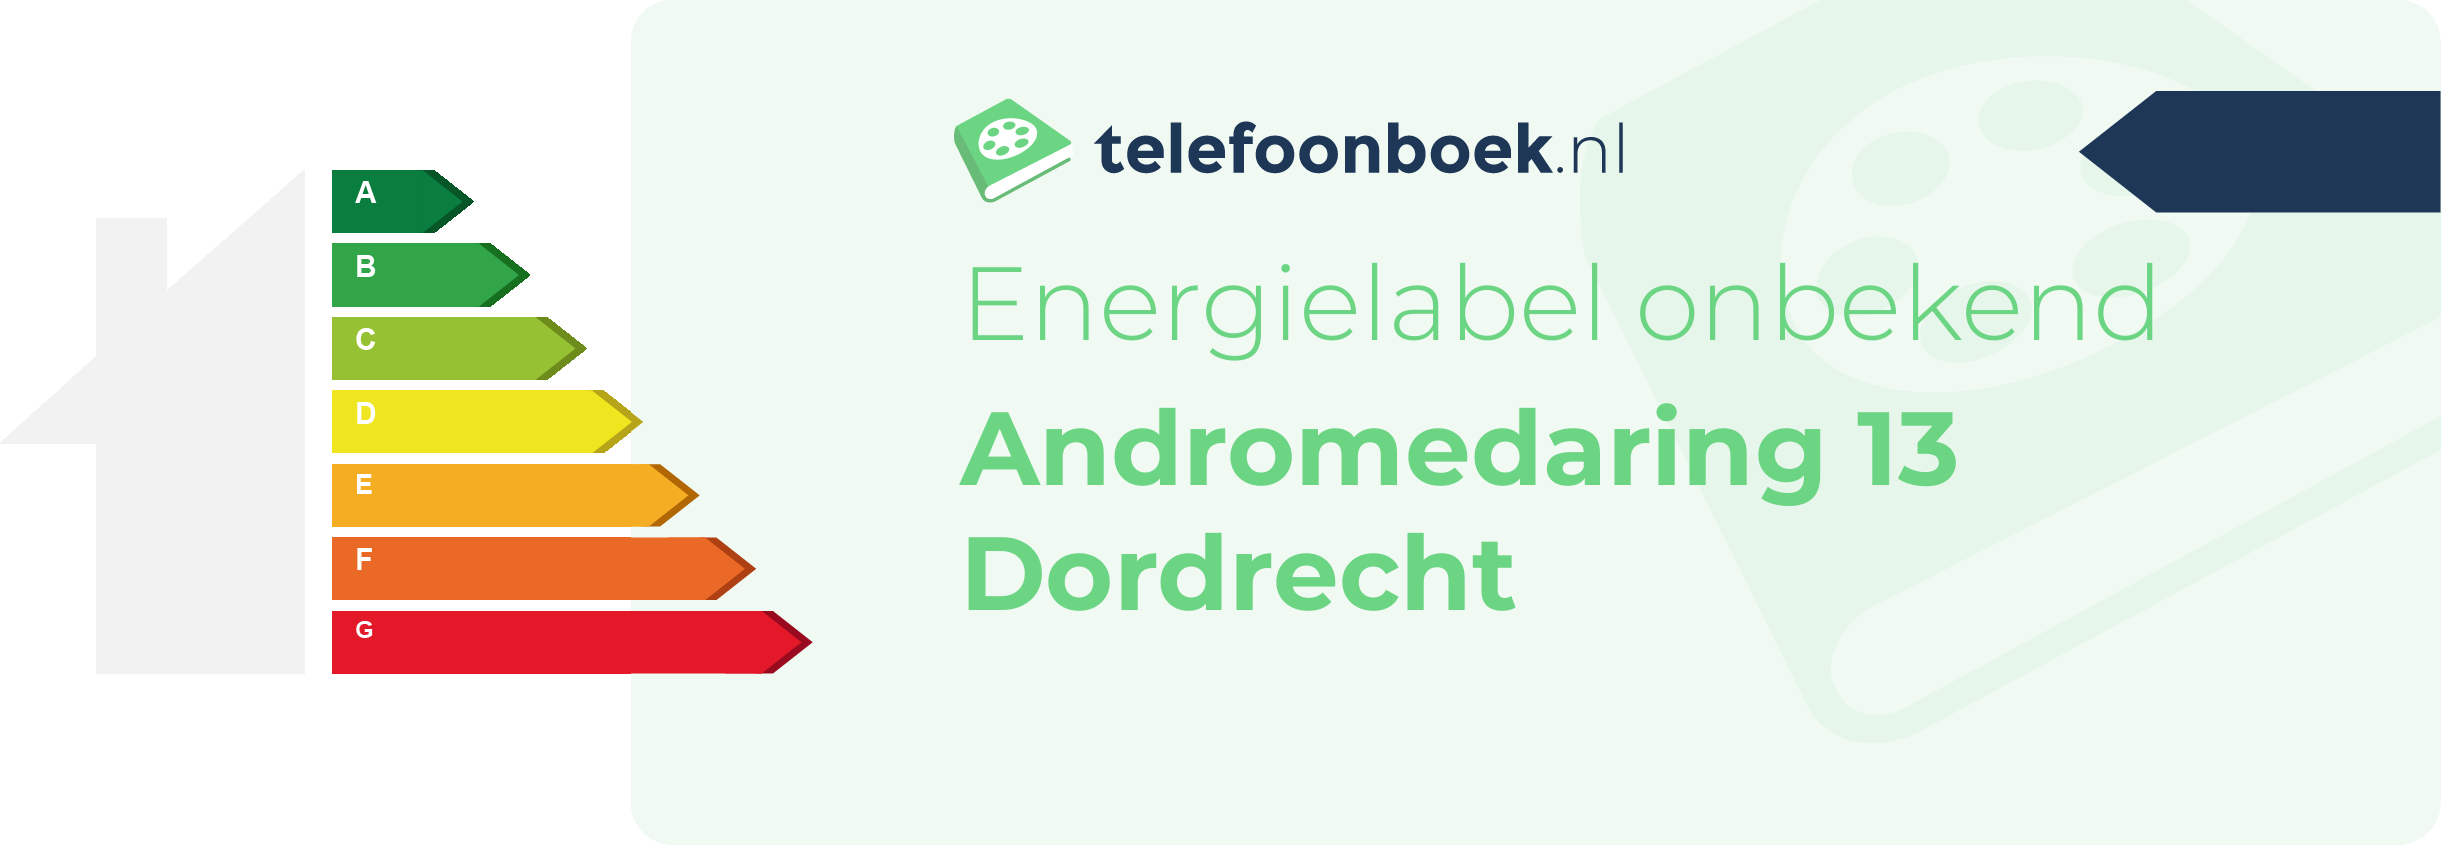 Energielabel Andromedaring 13 Dordrecht